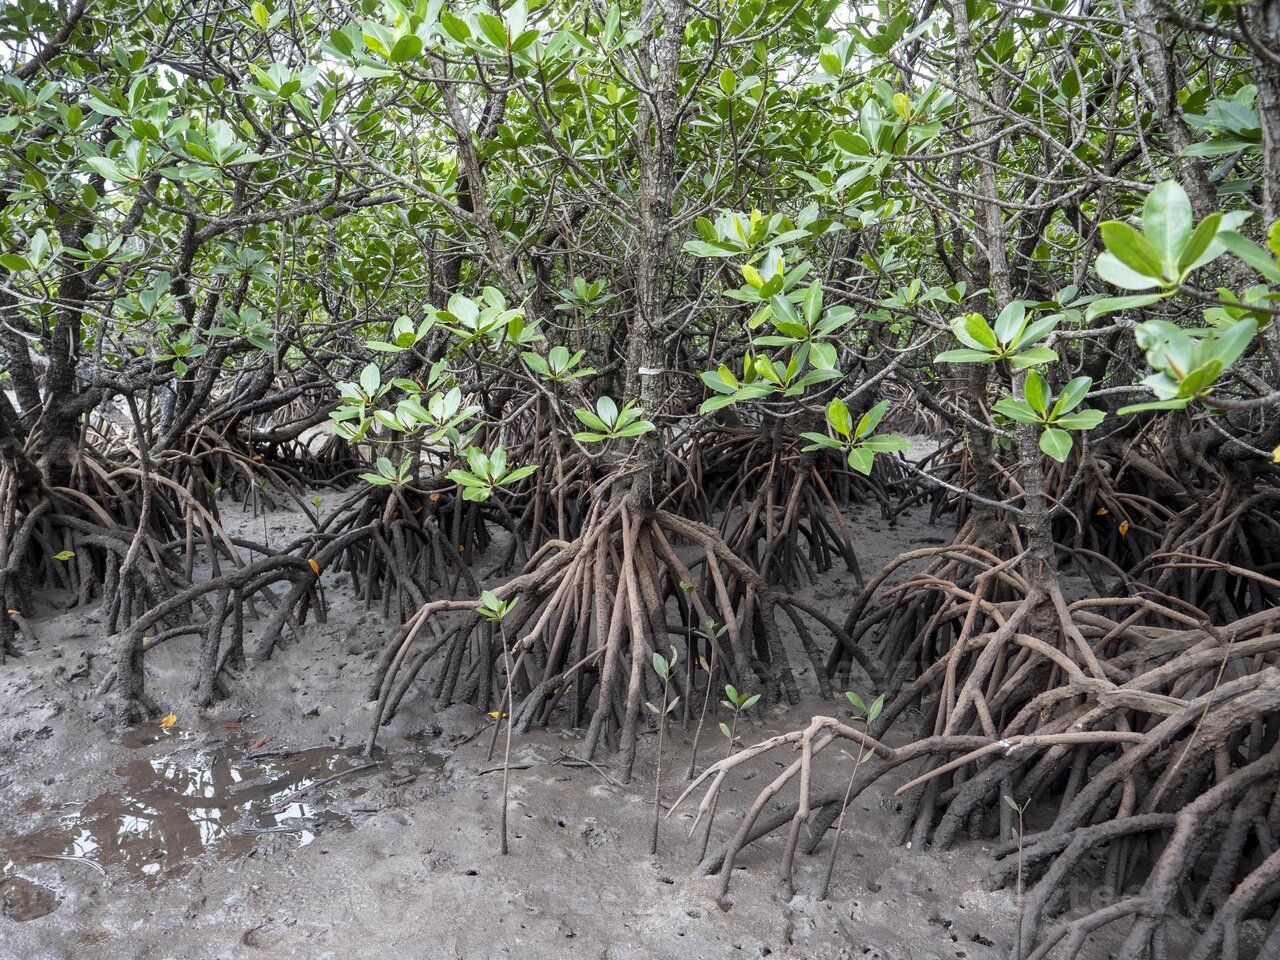 Iran's Mangrove Ecosystem Under Threat from Human Activities